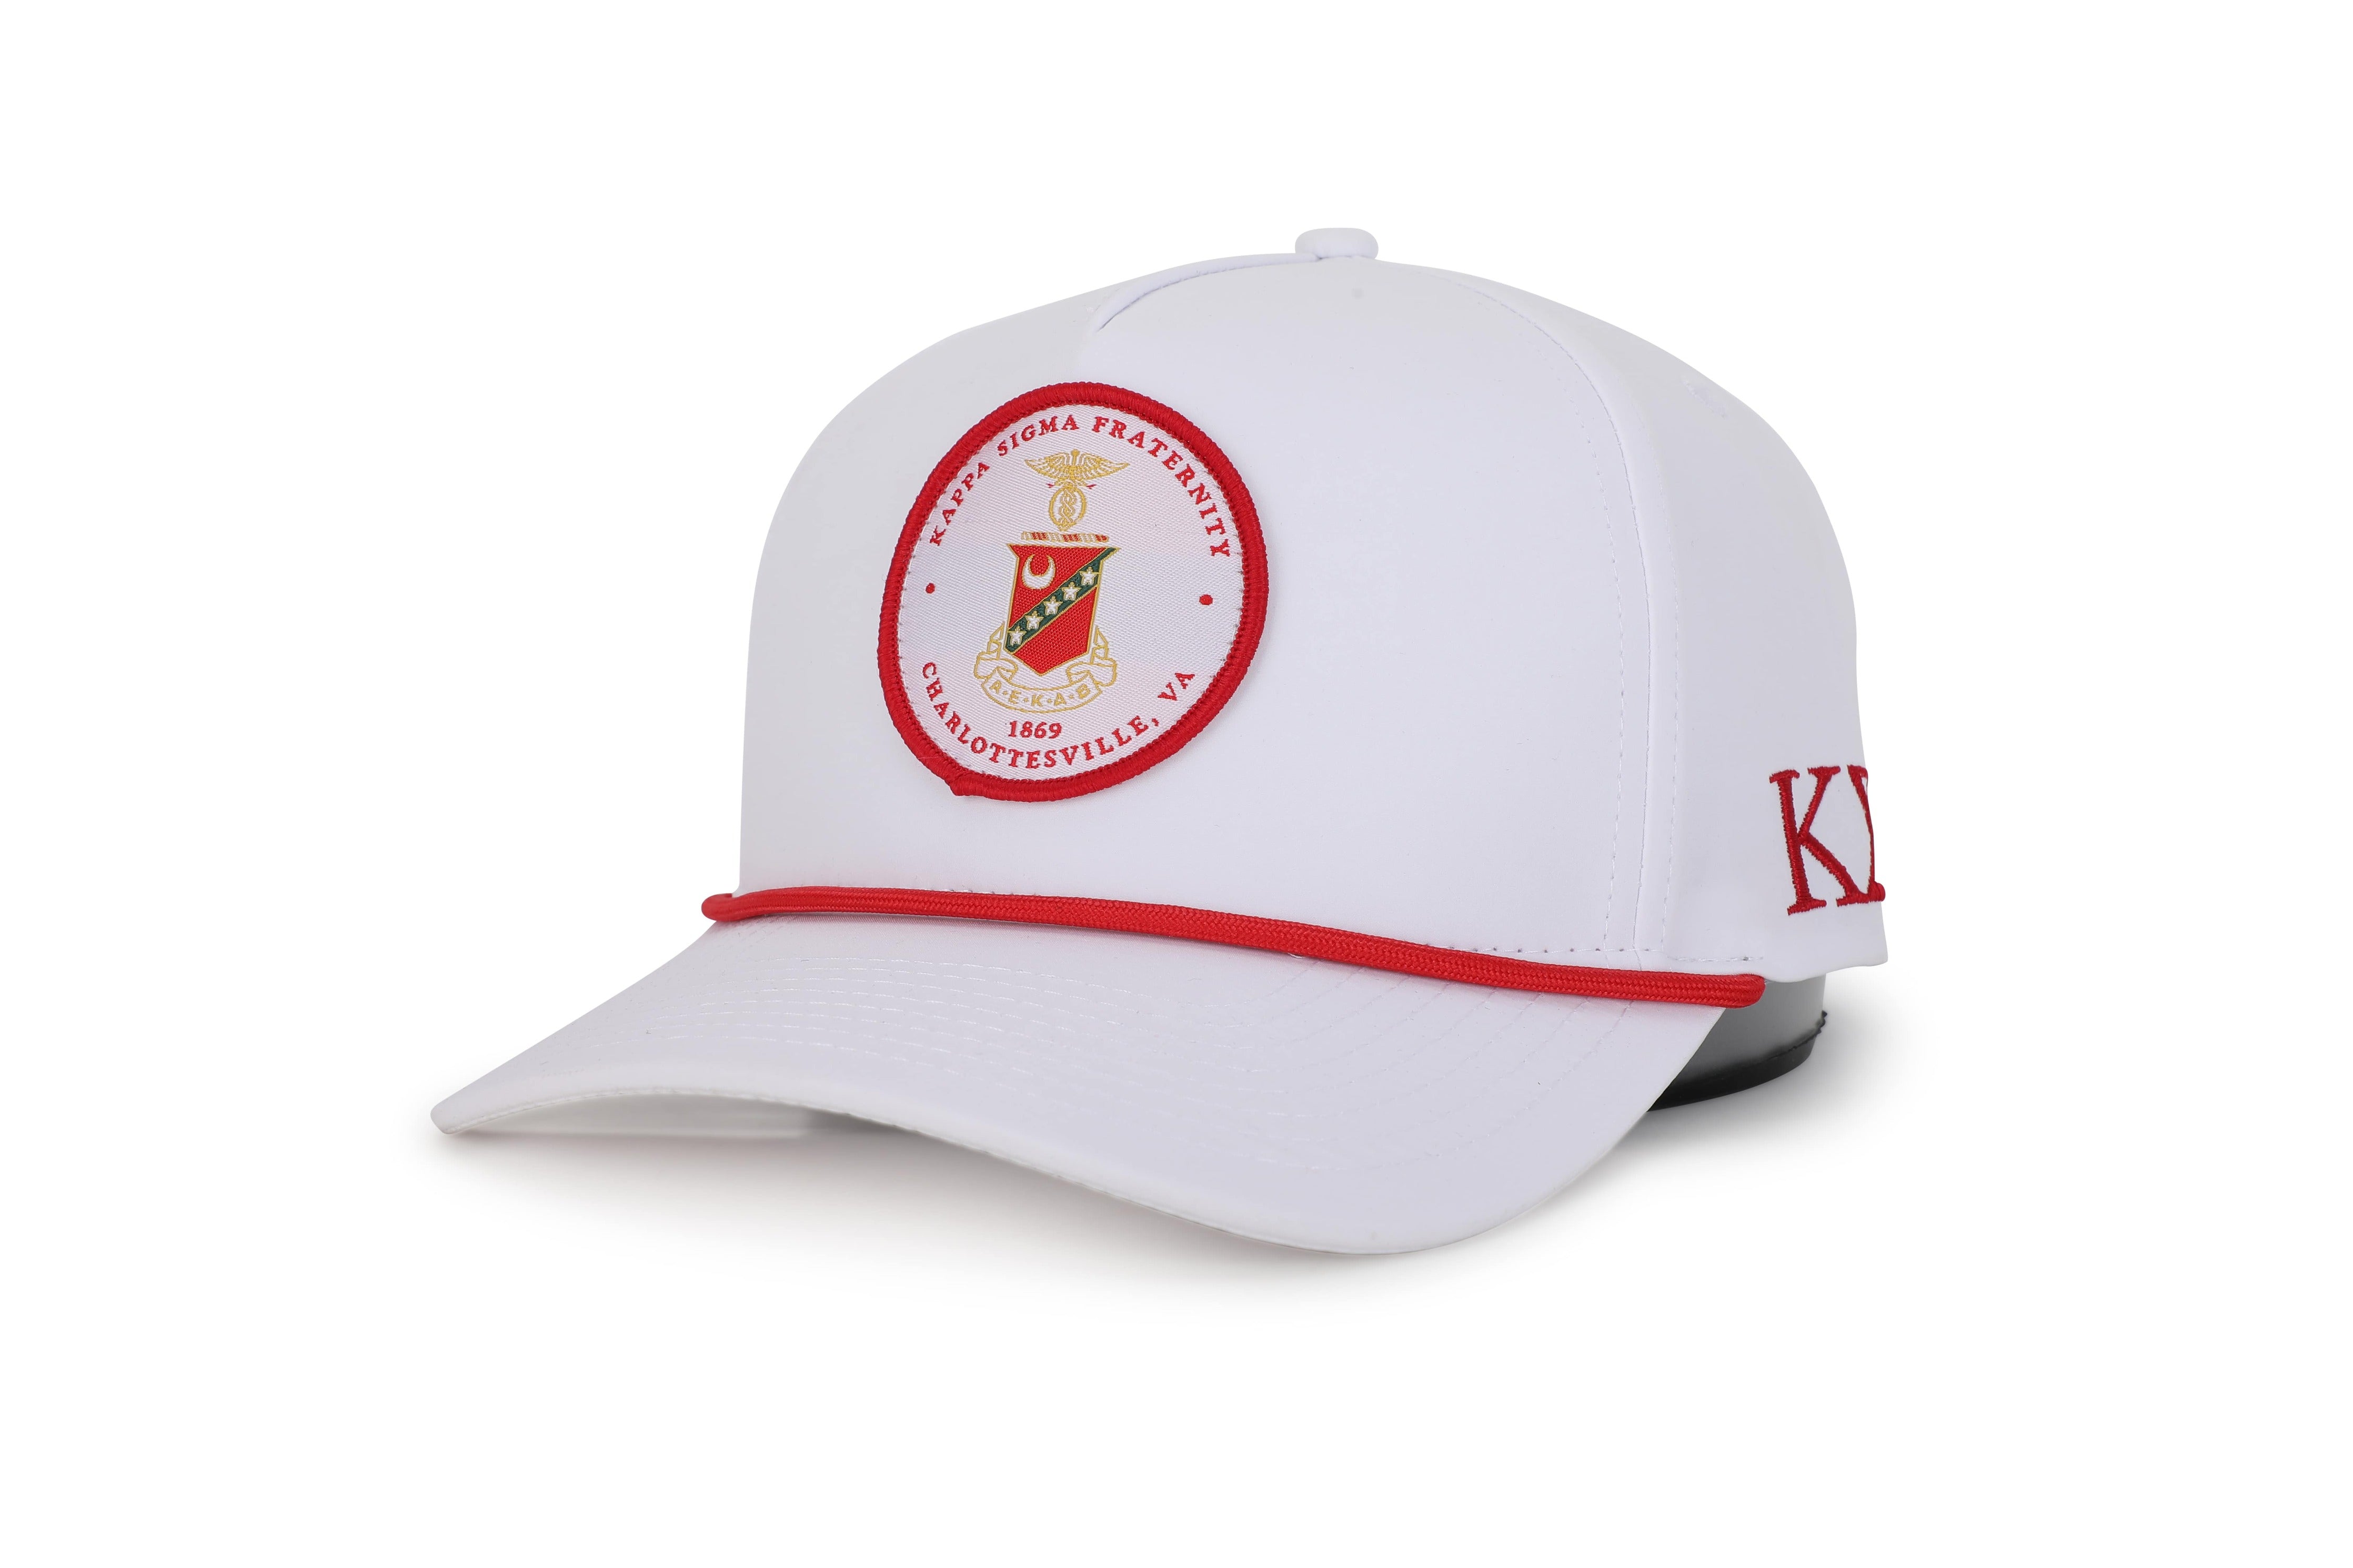 Kappa Sigma Rope Hat